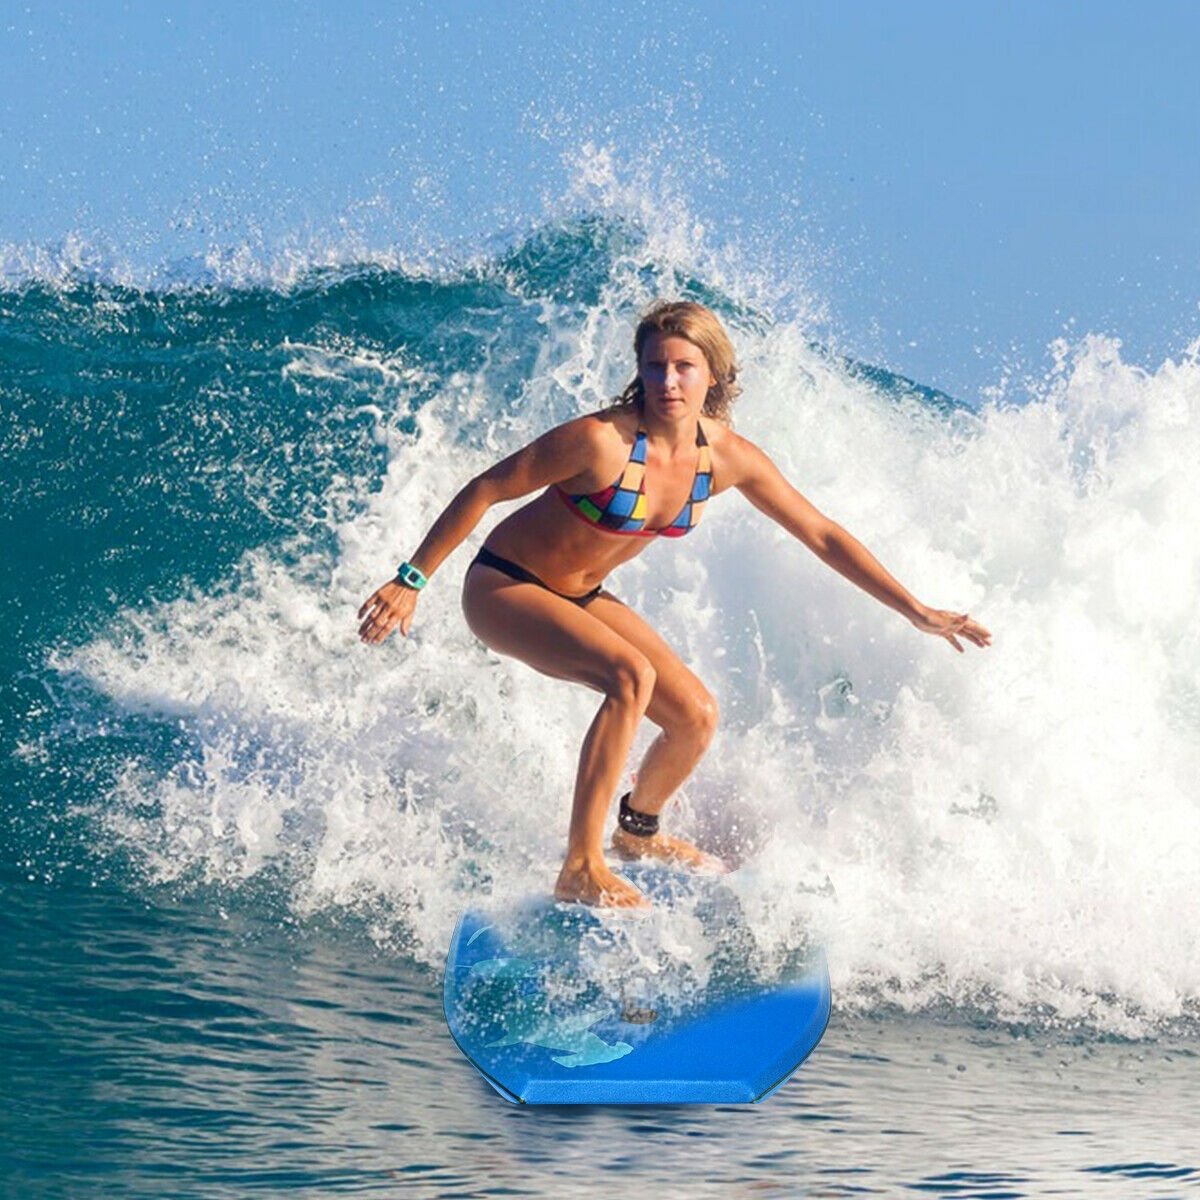 Lightweight Super Bodyboard Surfing with EPS Core Boarding-S, Blue